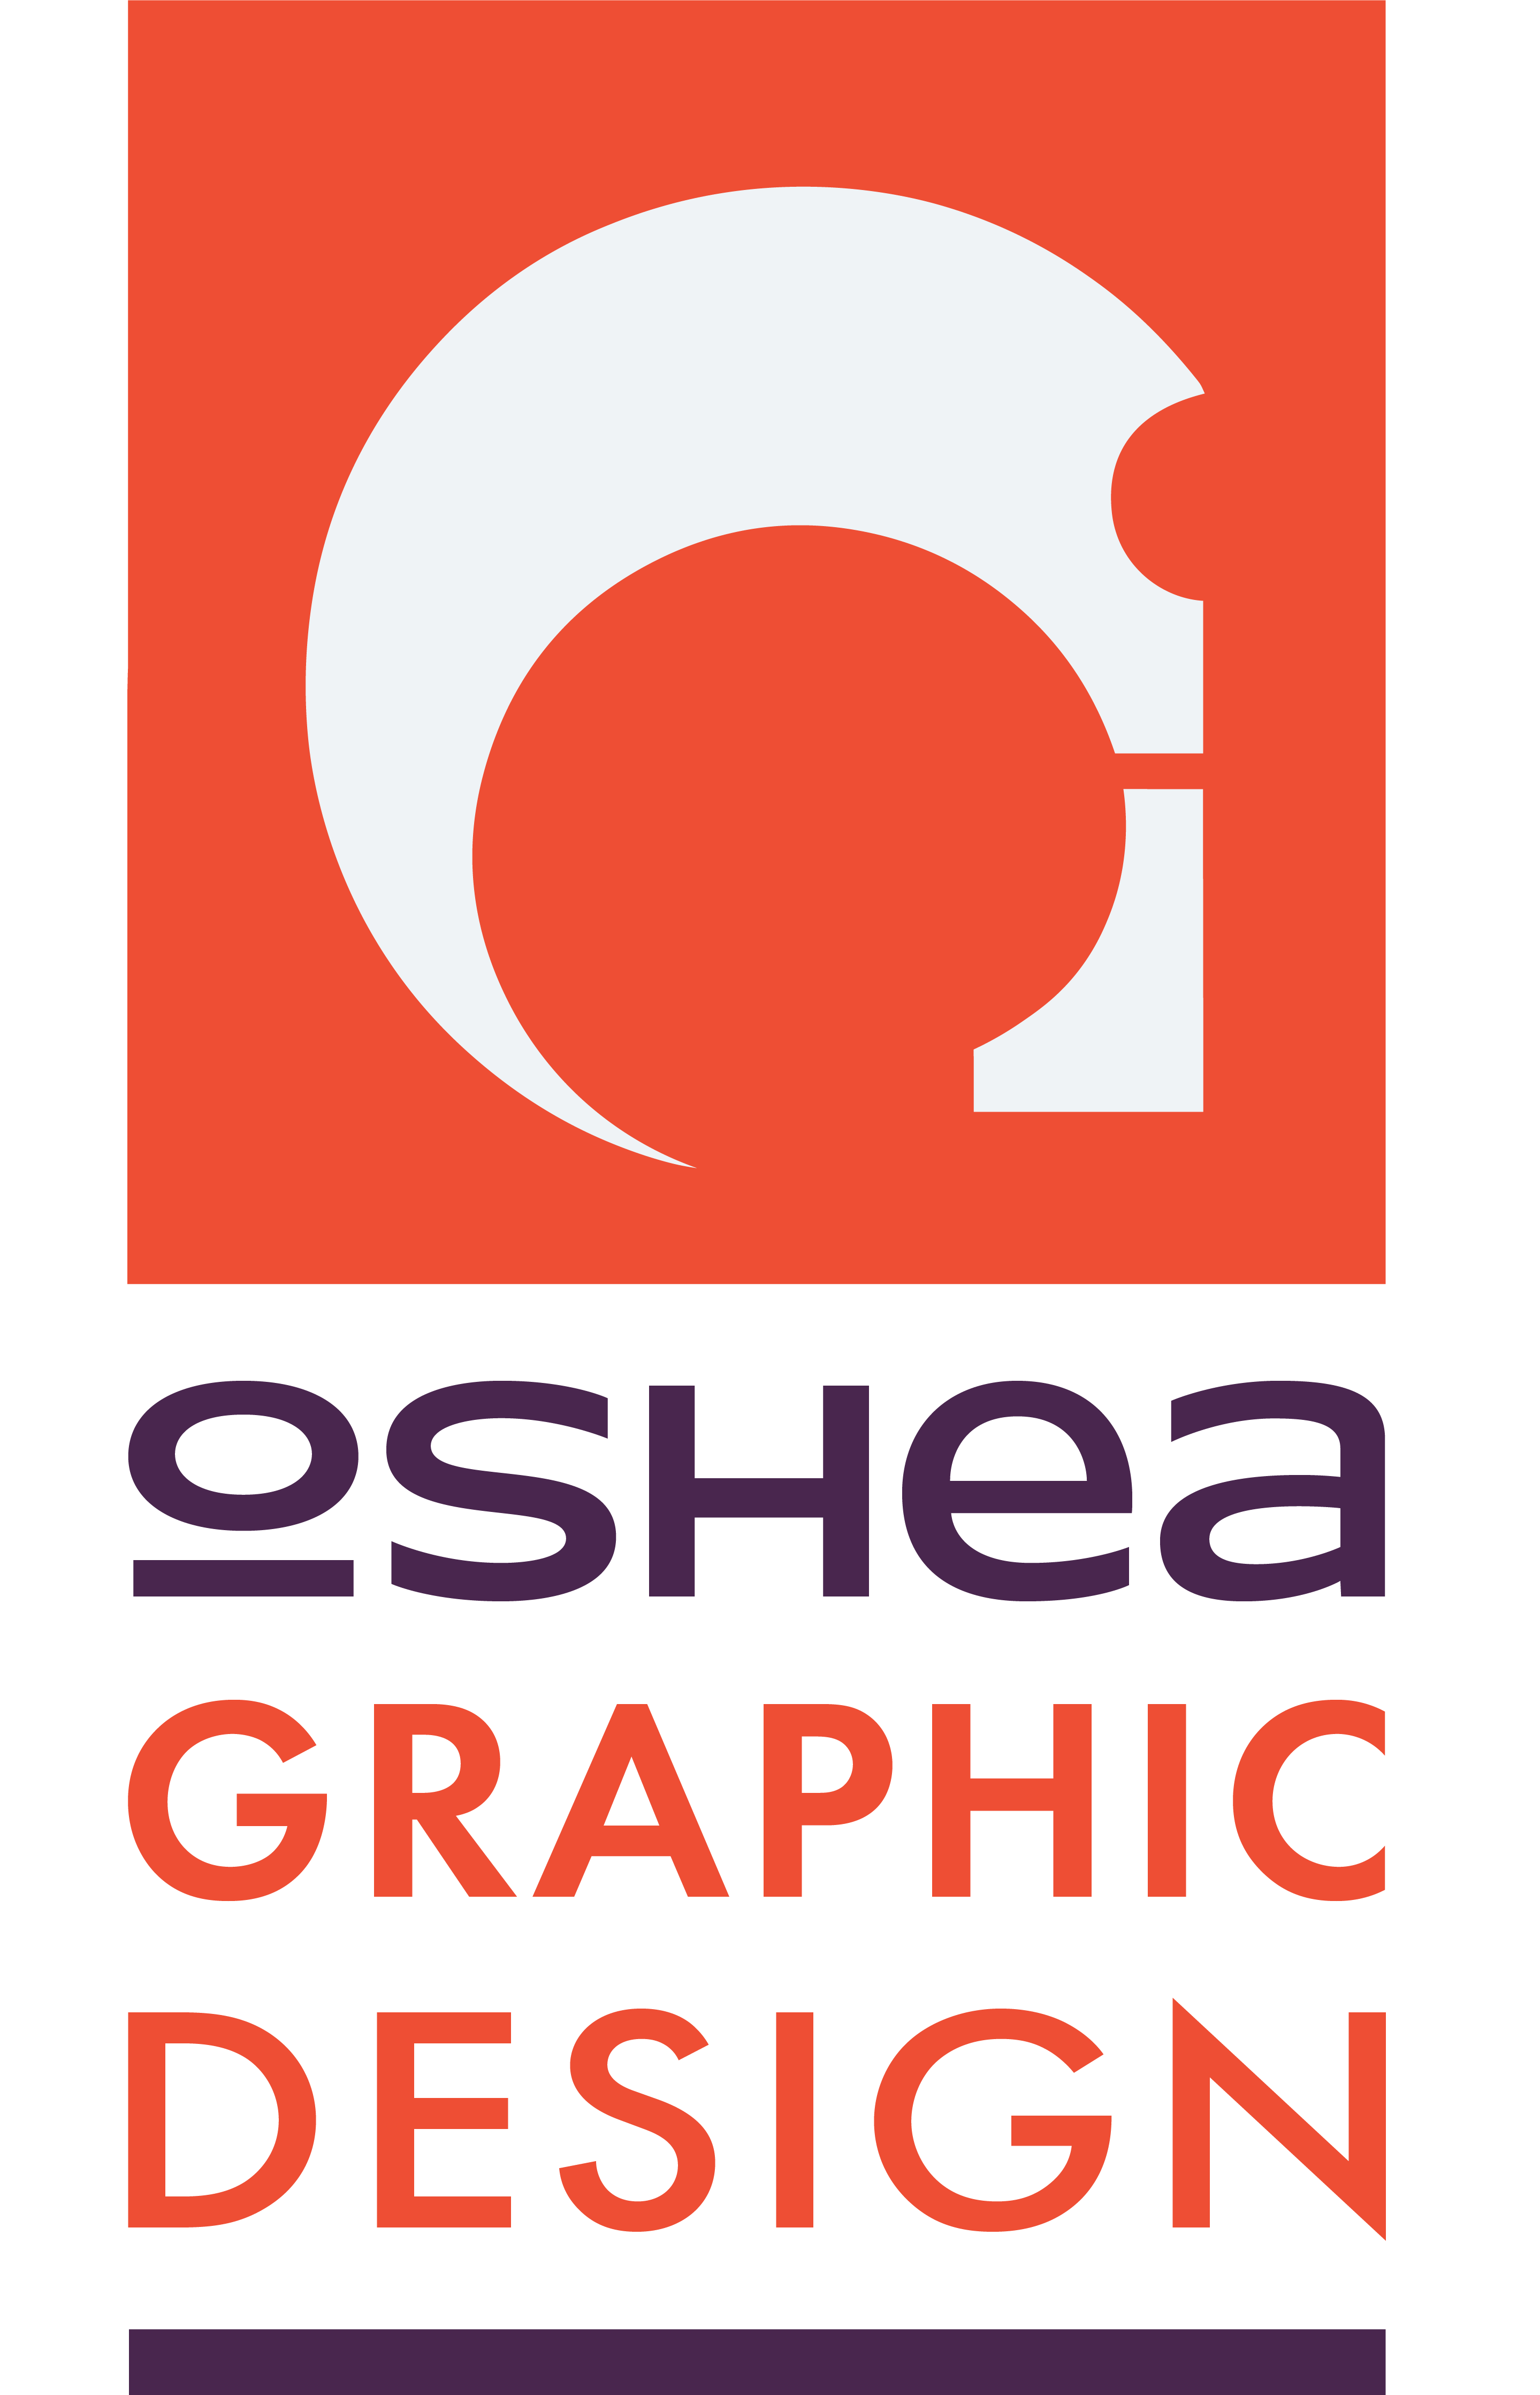 oshea graphic design